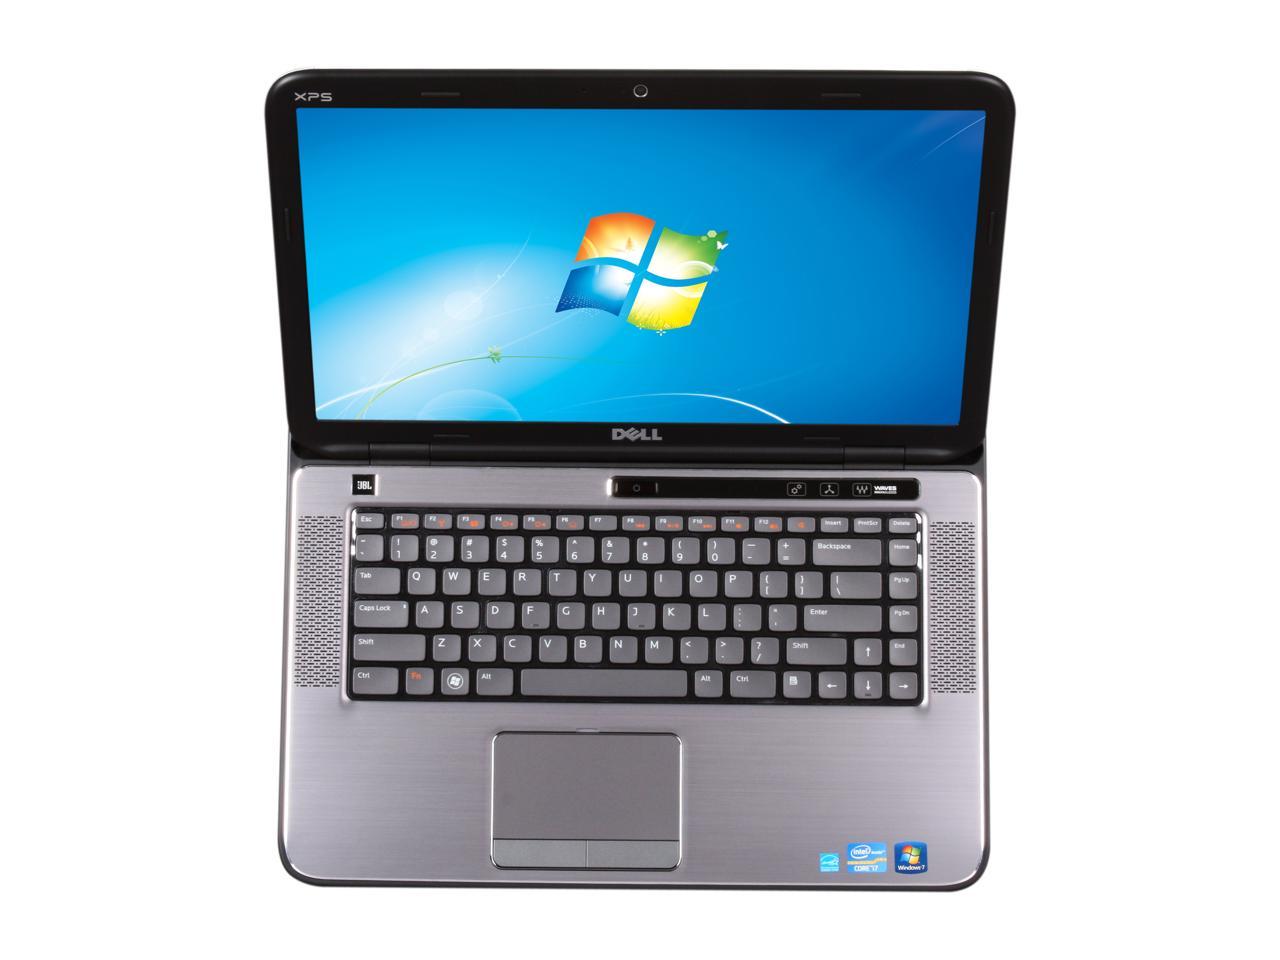 DELL Laptop XPS 15 (L502x) Intel Core i7 2nd Gen 2670QM (2.20GHz) 8GB